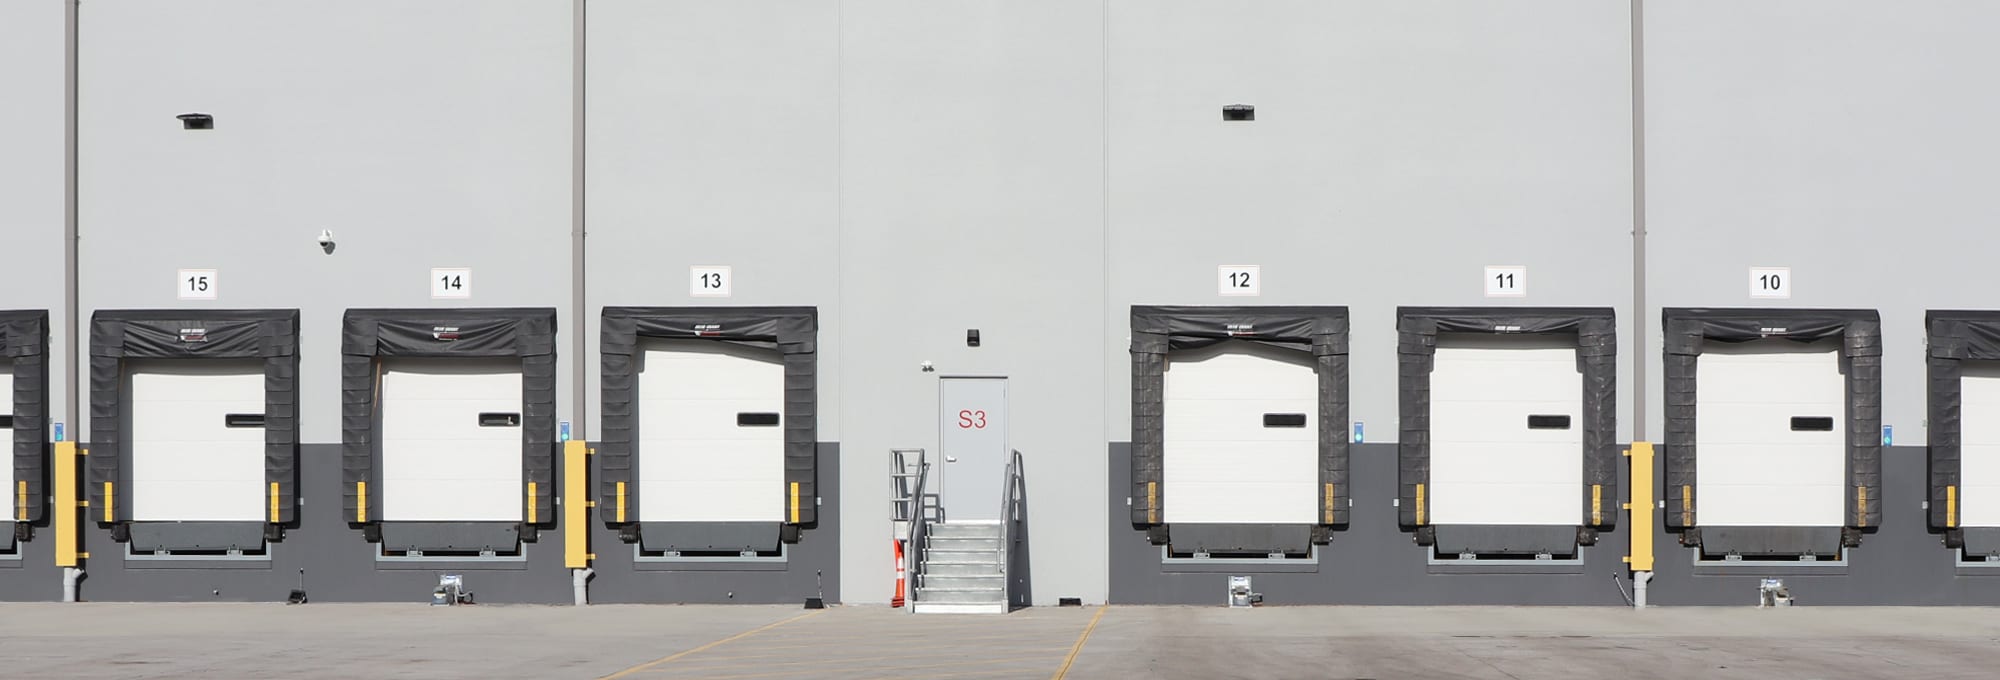 New Jersey Fulfillment Center - exterior loading docks